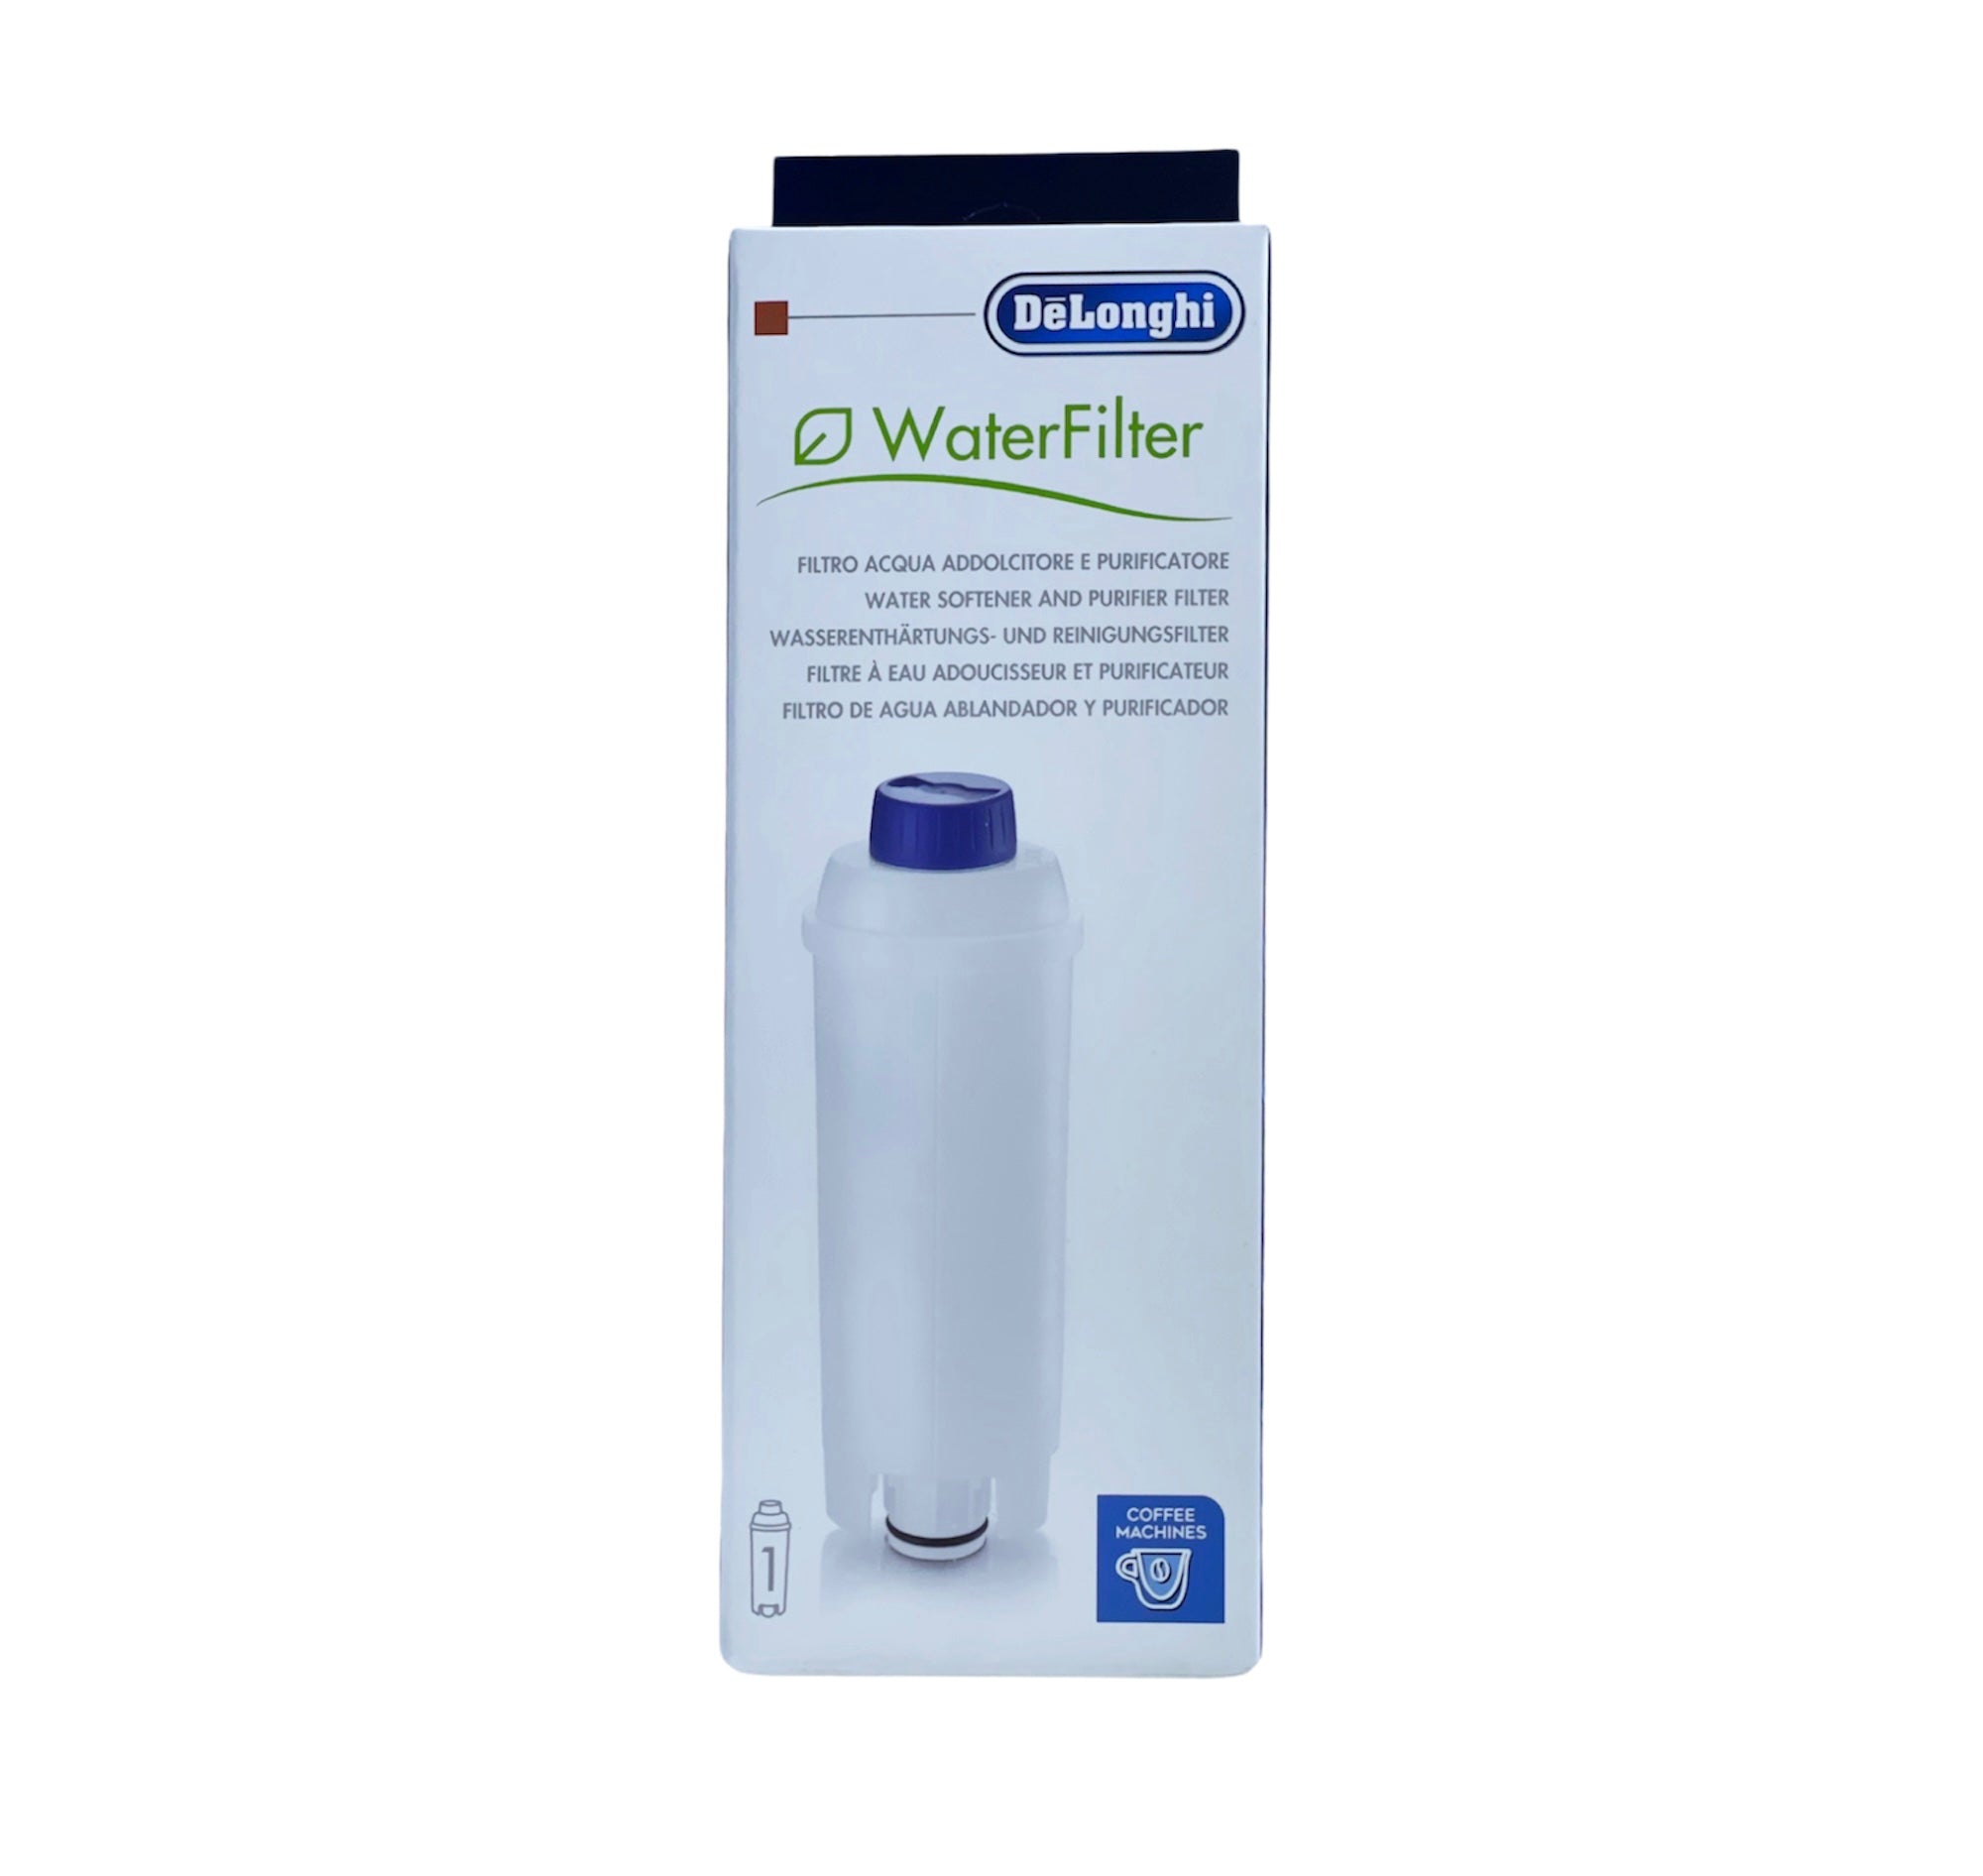 DeLonghi water filter